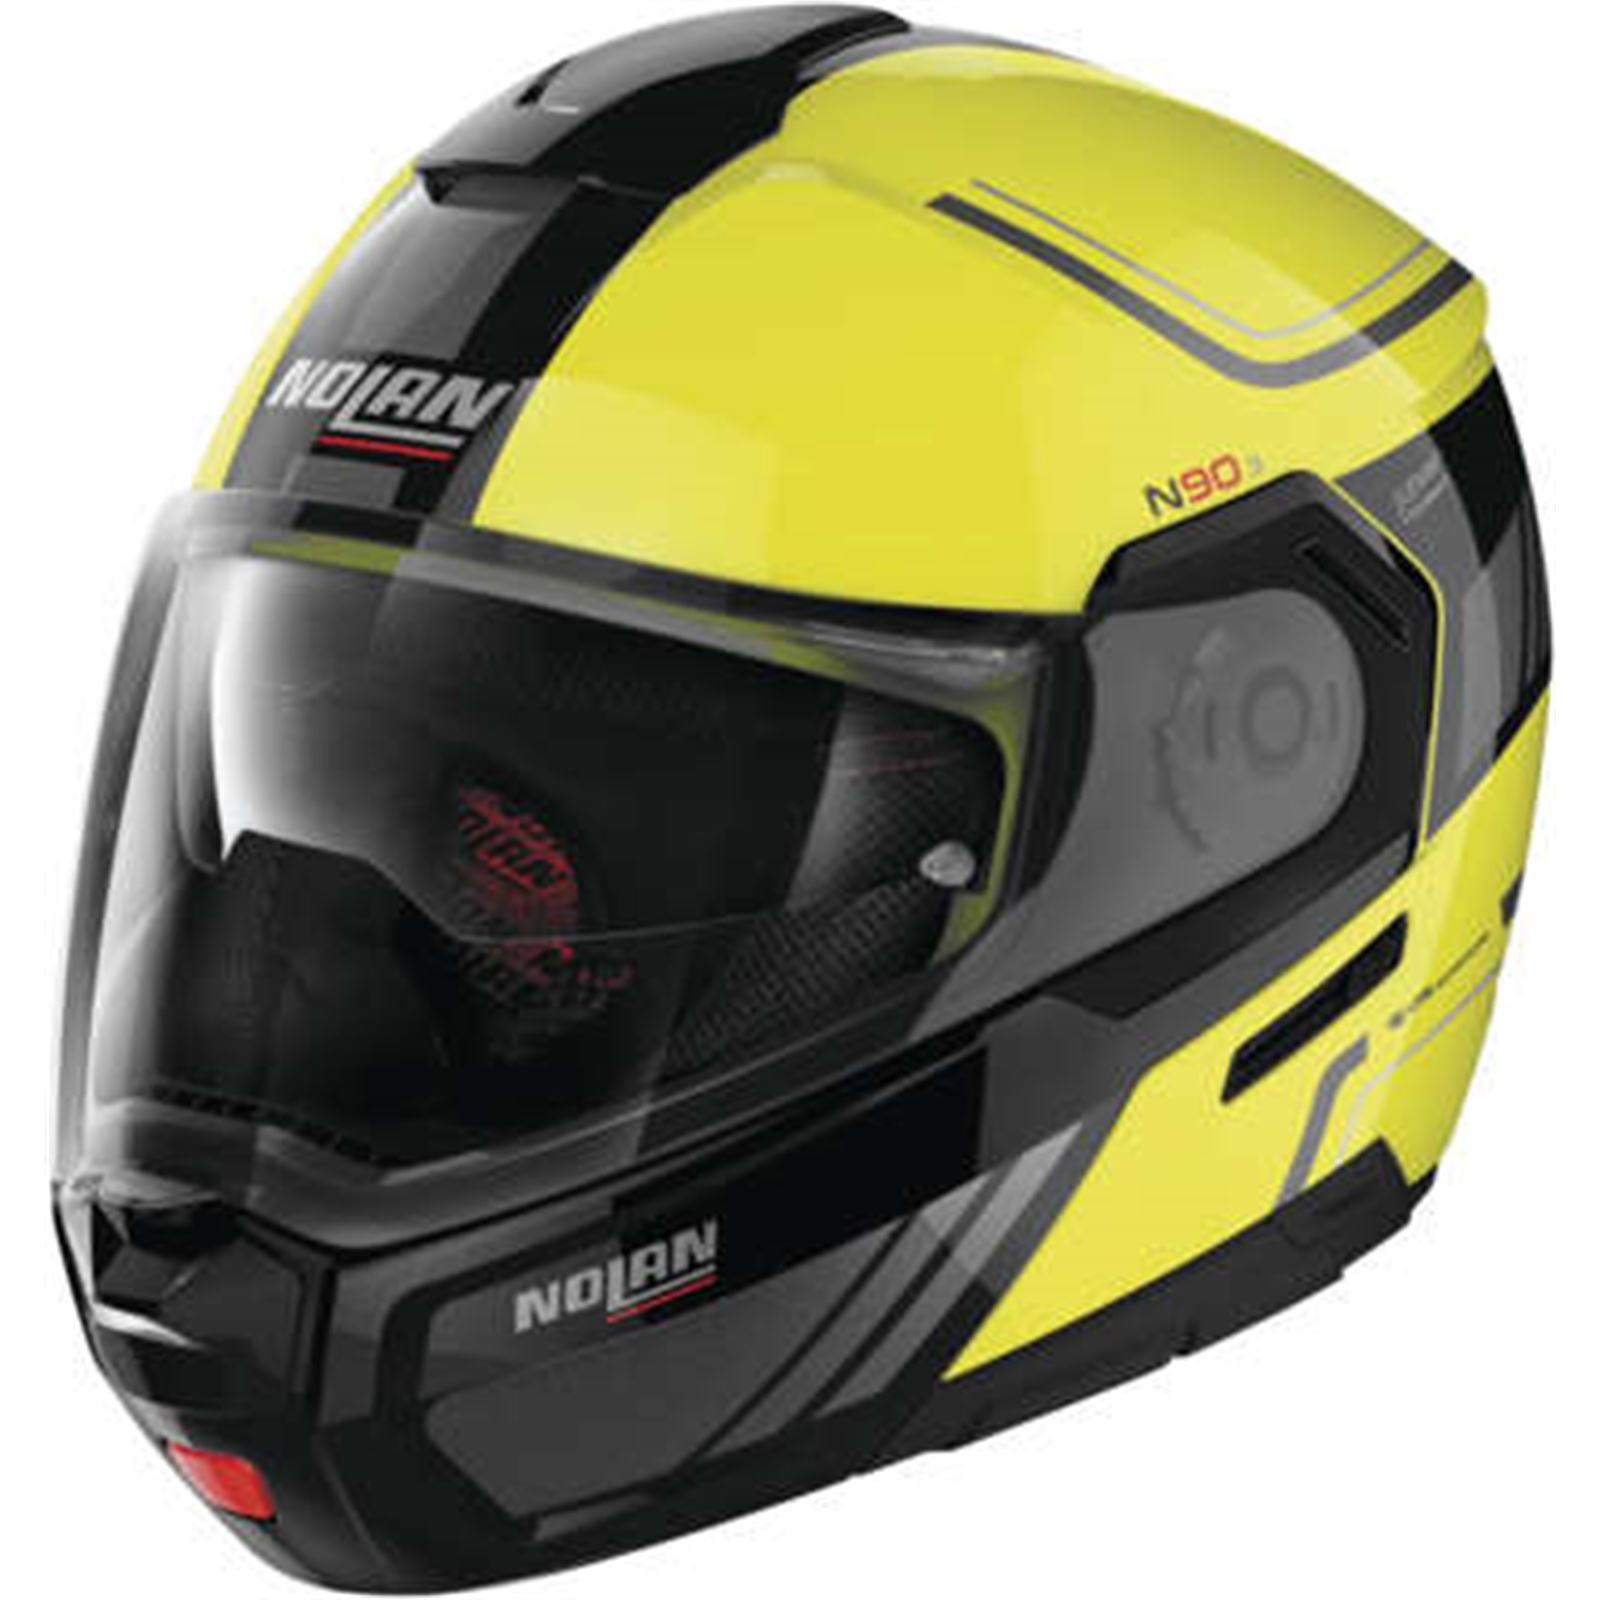 Nolan Helmets N90-3 Voyager Helmet - LED Yellow - X-Large